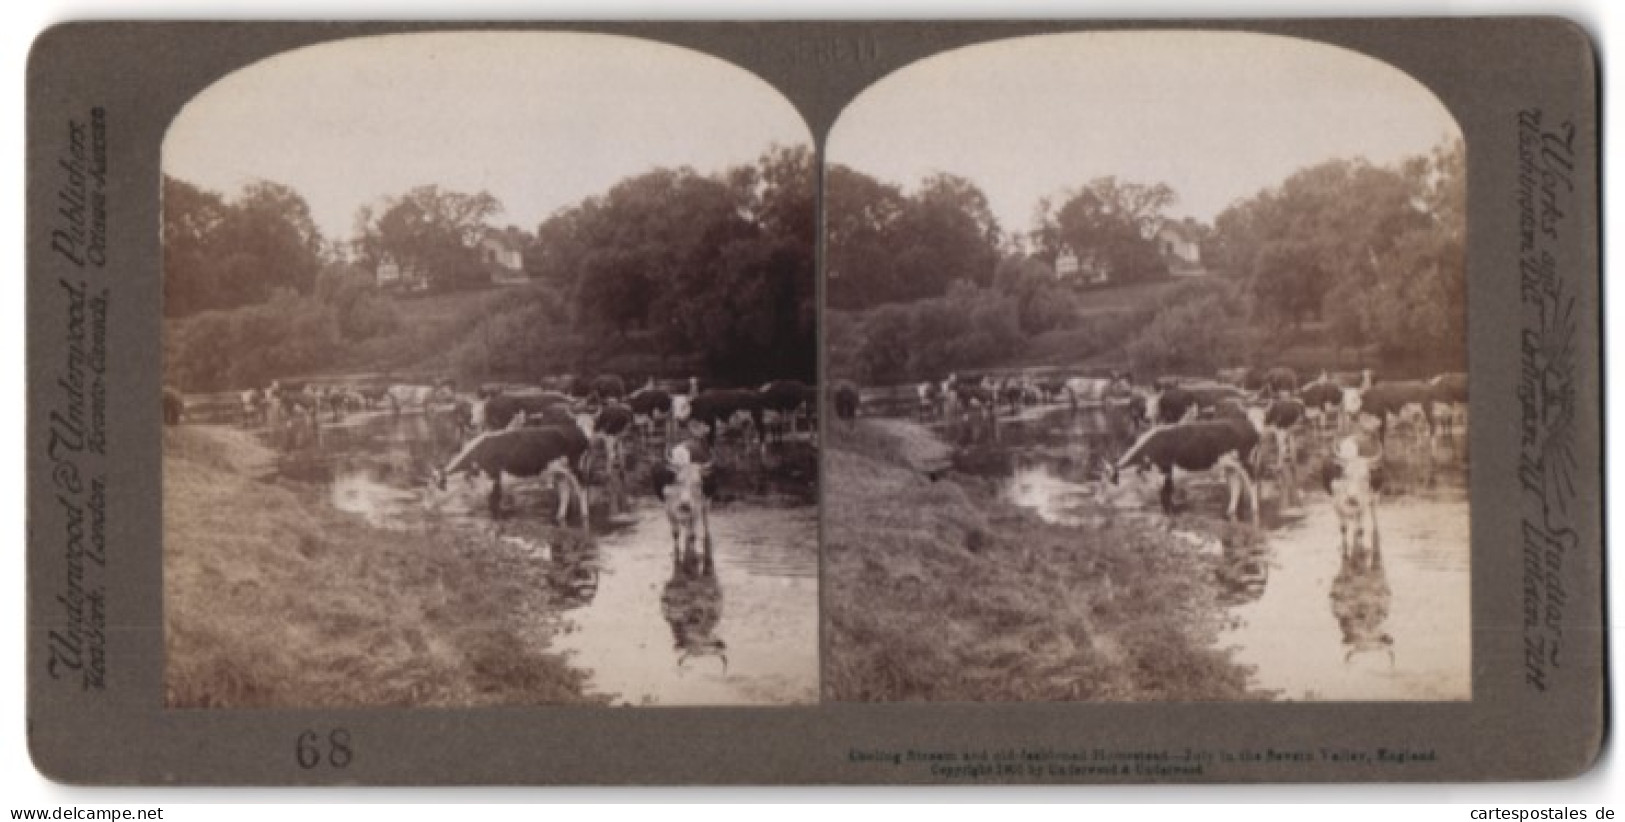 Stereo-Photo Underwood & Underwood, New York, Ansicht Severn Valley, Rinderherde Am Fluss  - Stereoscopic